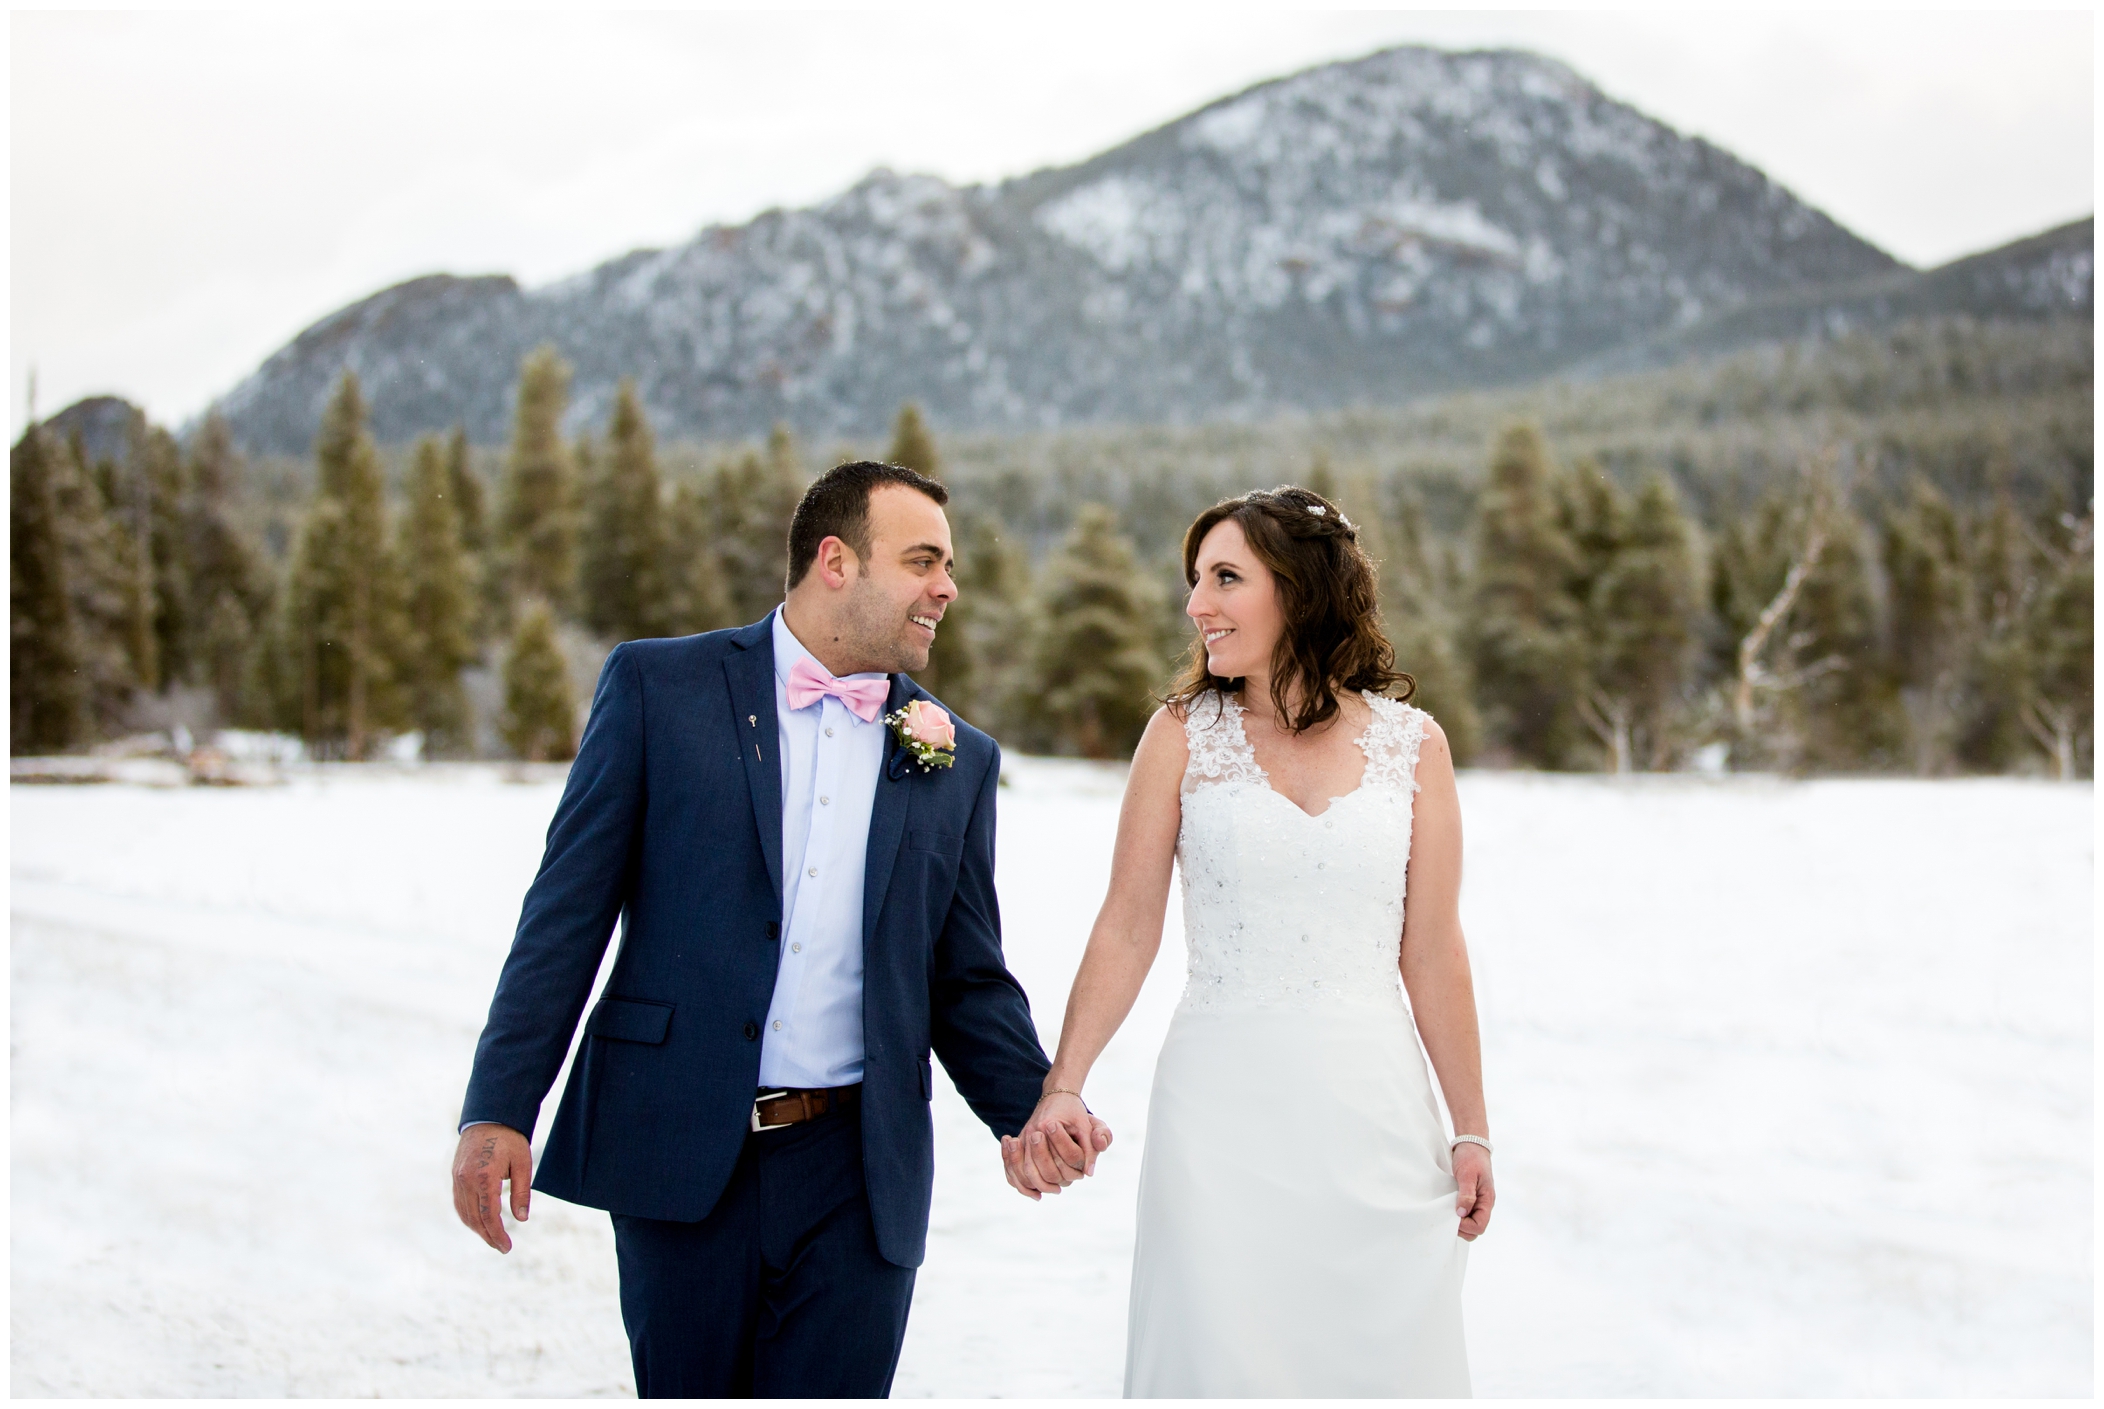 Estes Park wedding pictures at Sprague Lake by Colorado photographer Plum Pretty Photography